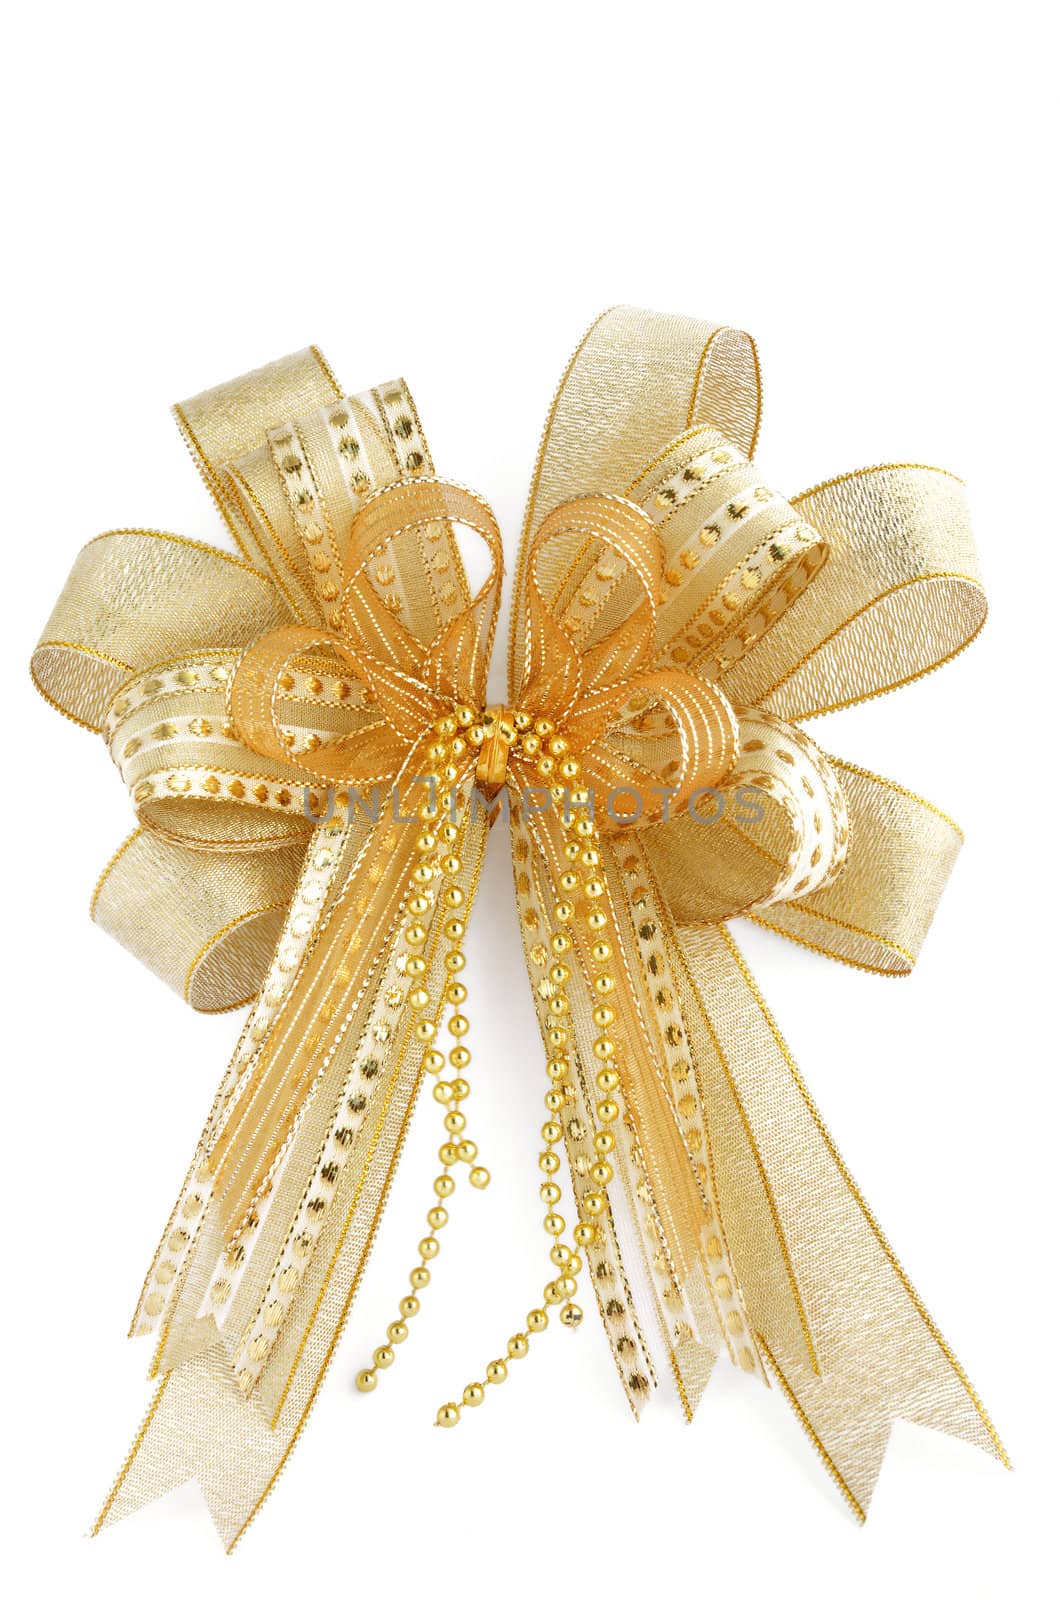 Shiny golden Christmas gift bow decoration isolated on white